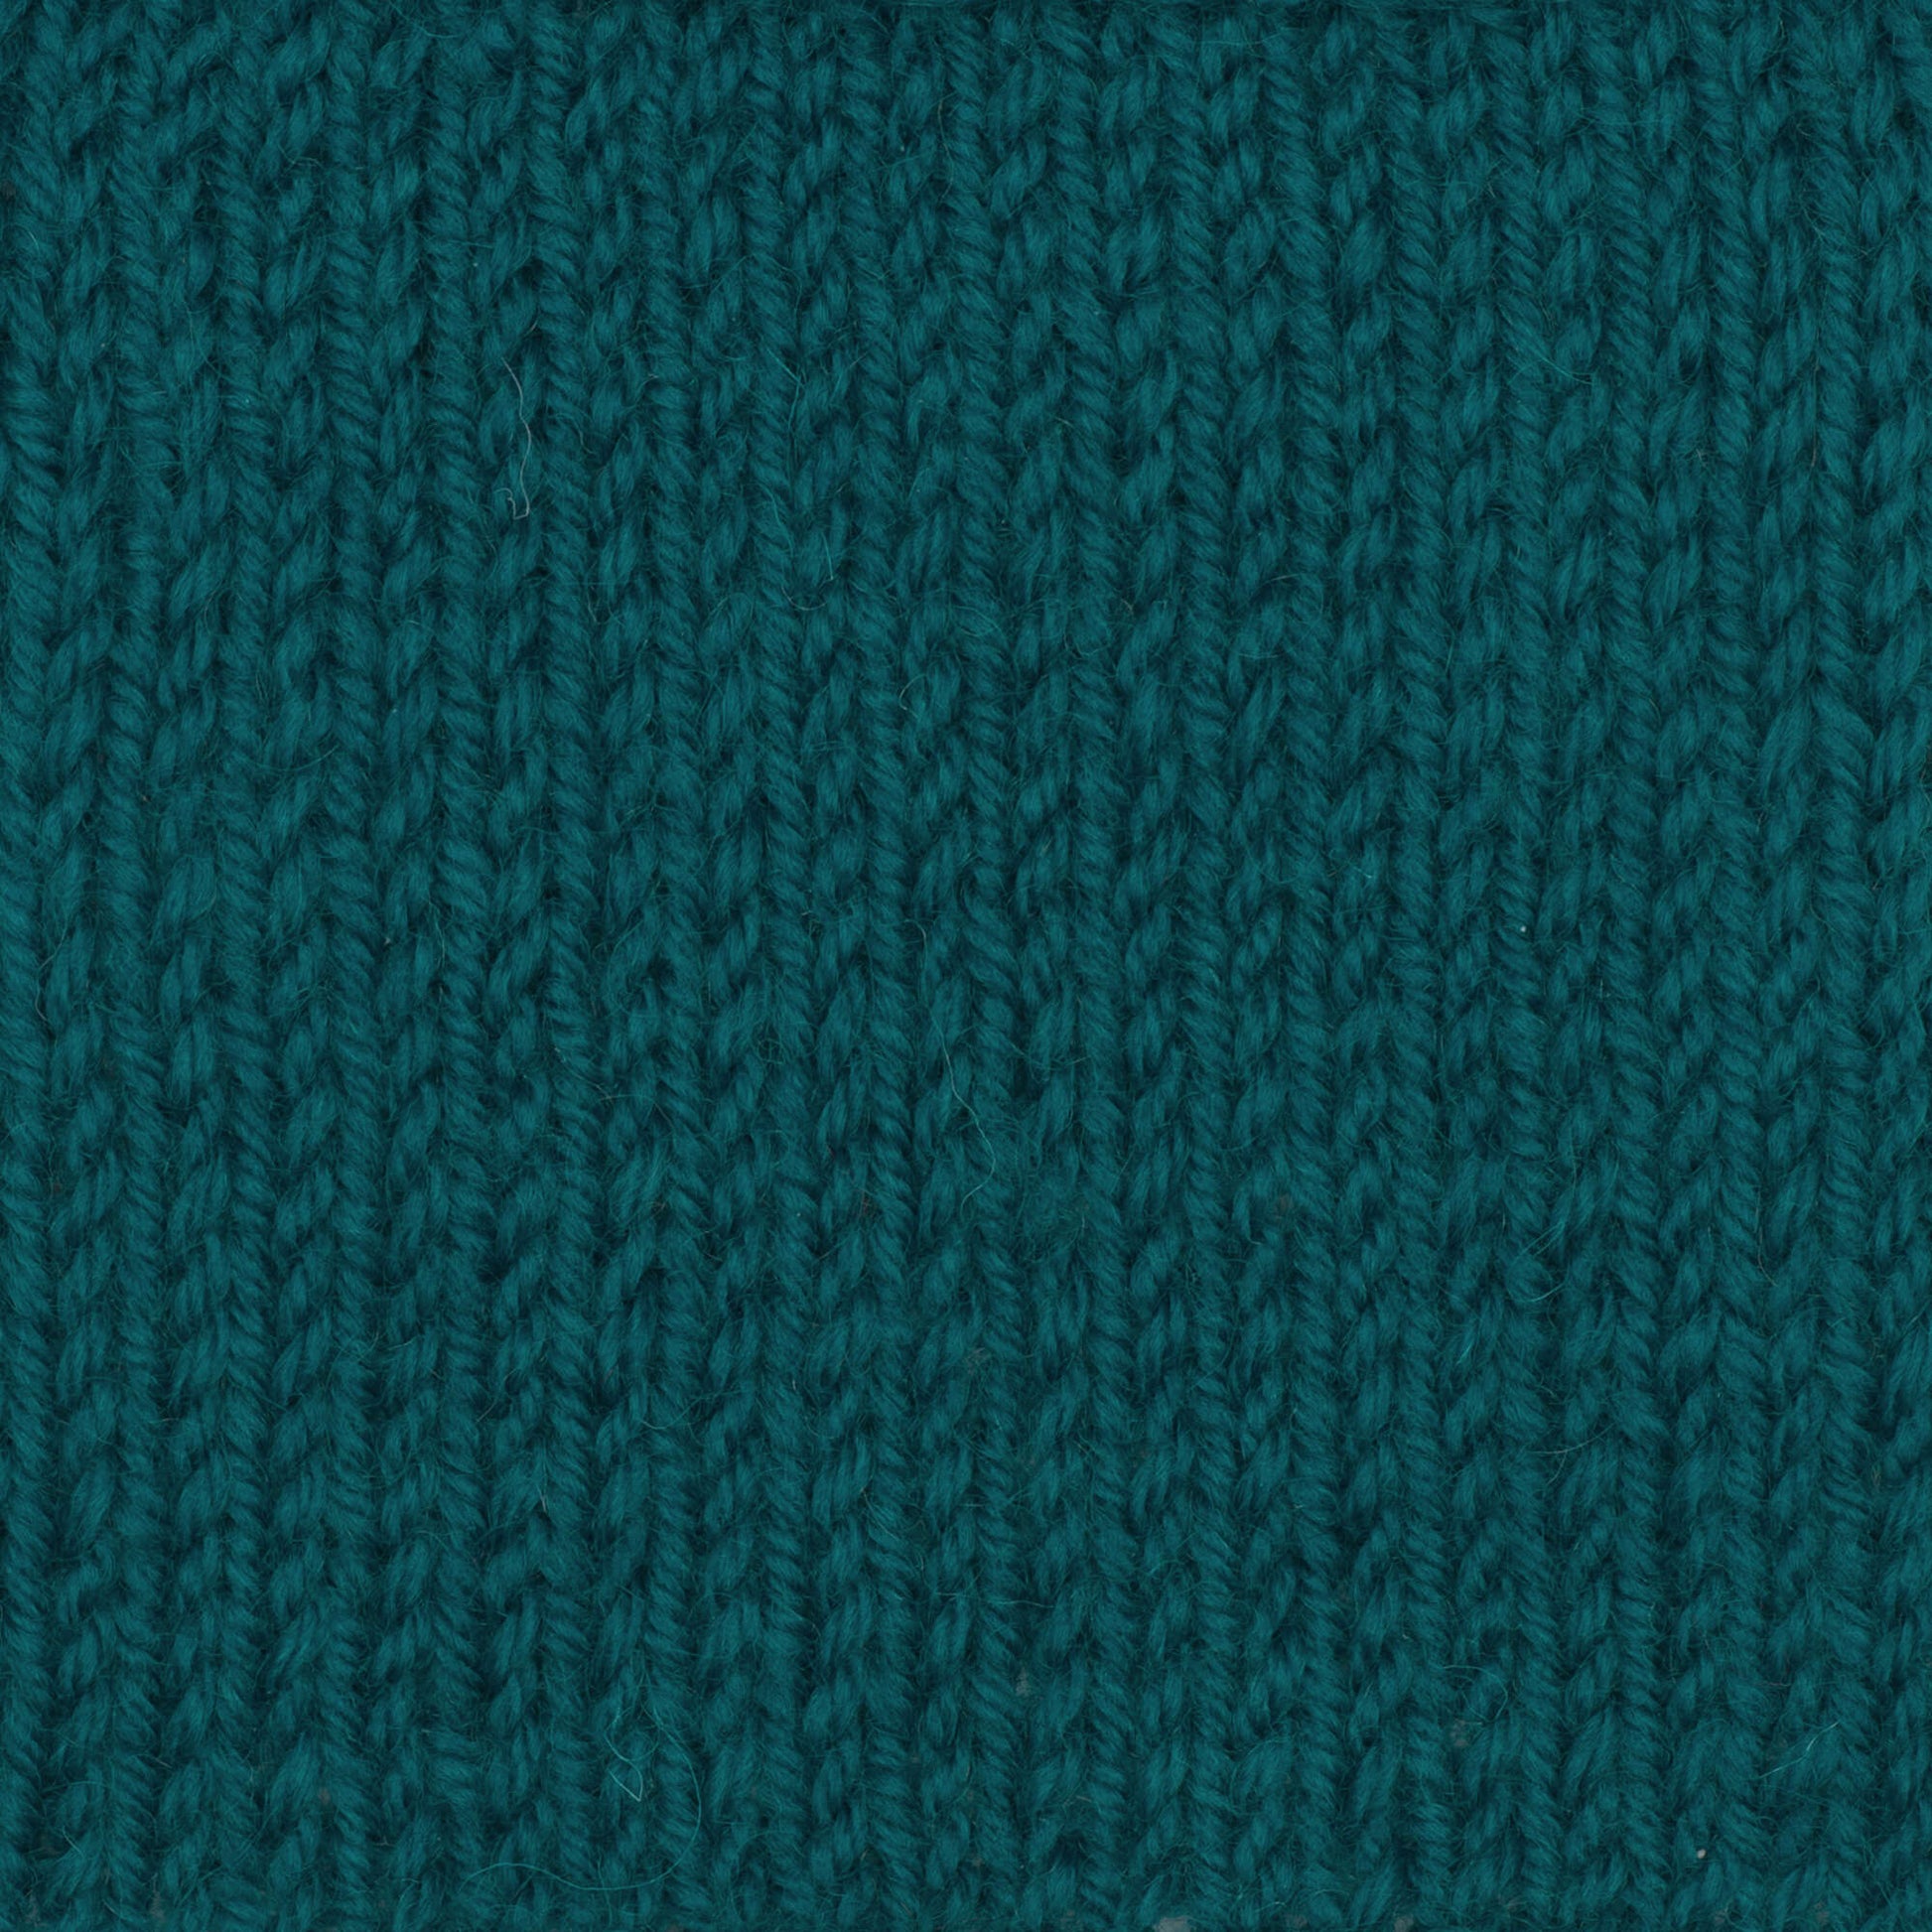 Patons Classic Wool DK Superwash Yarn - Discontinued Shades Mallard Teal